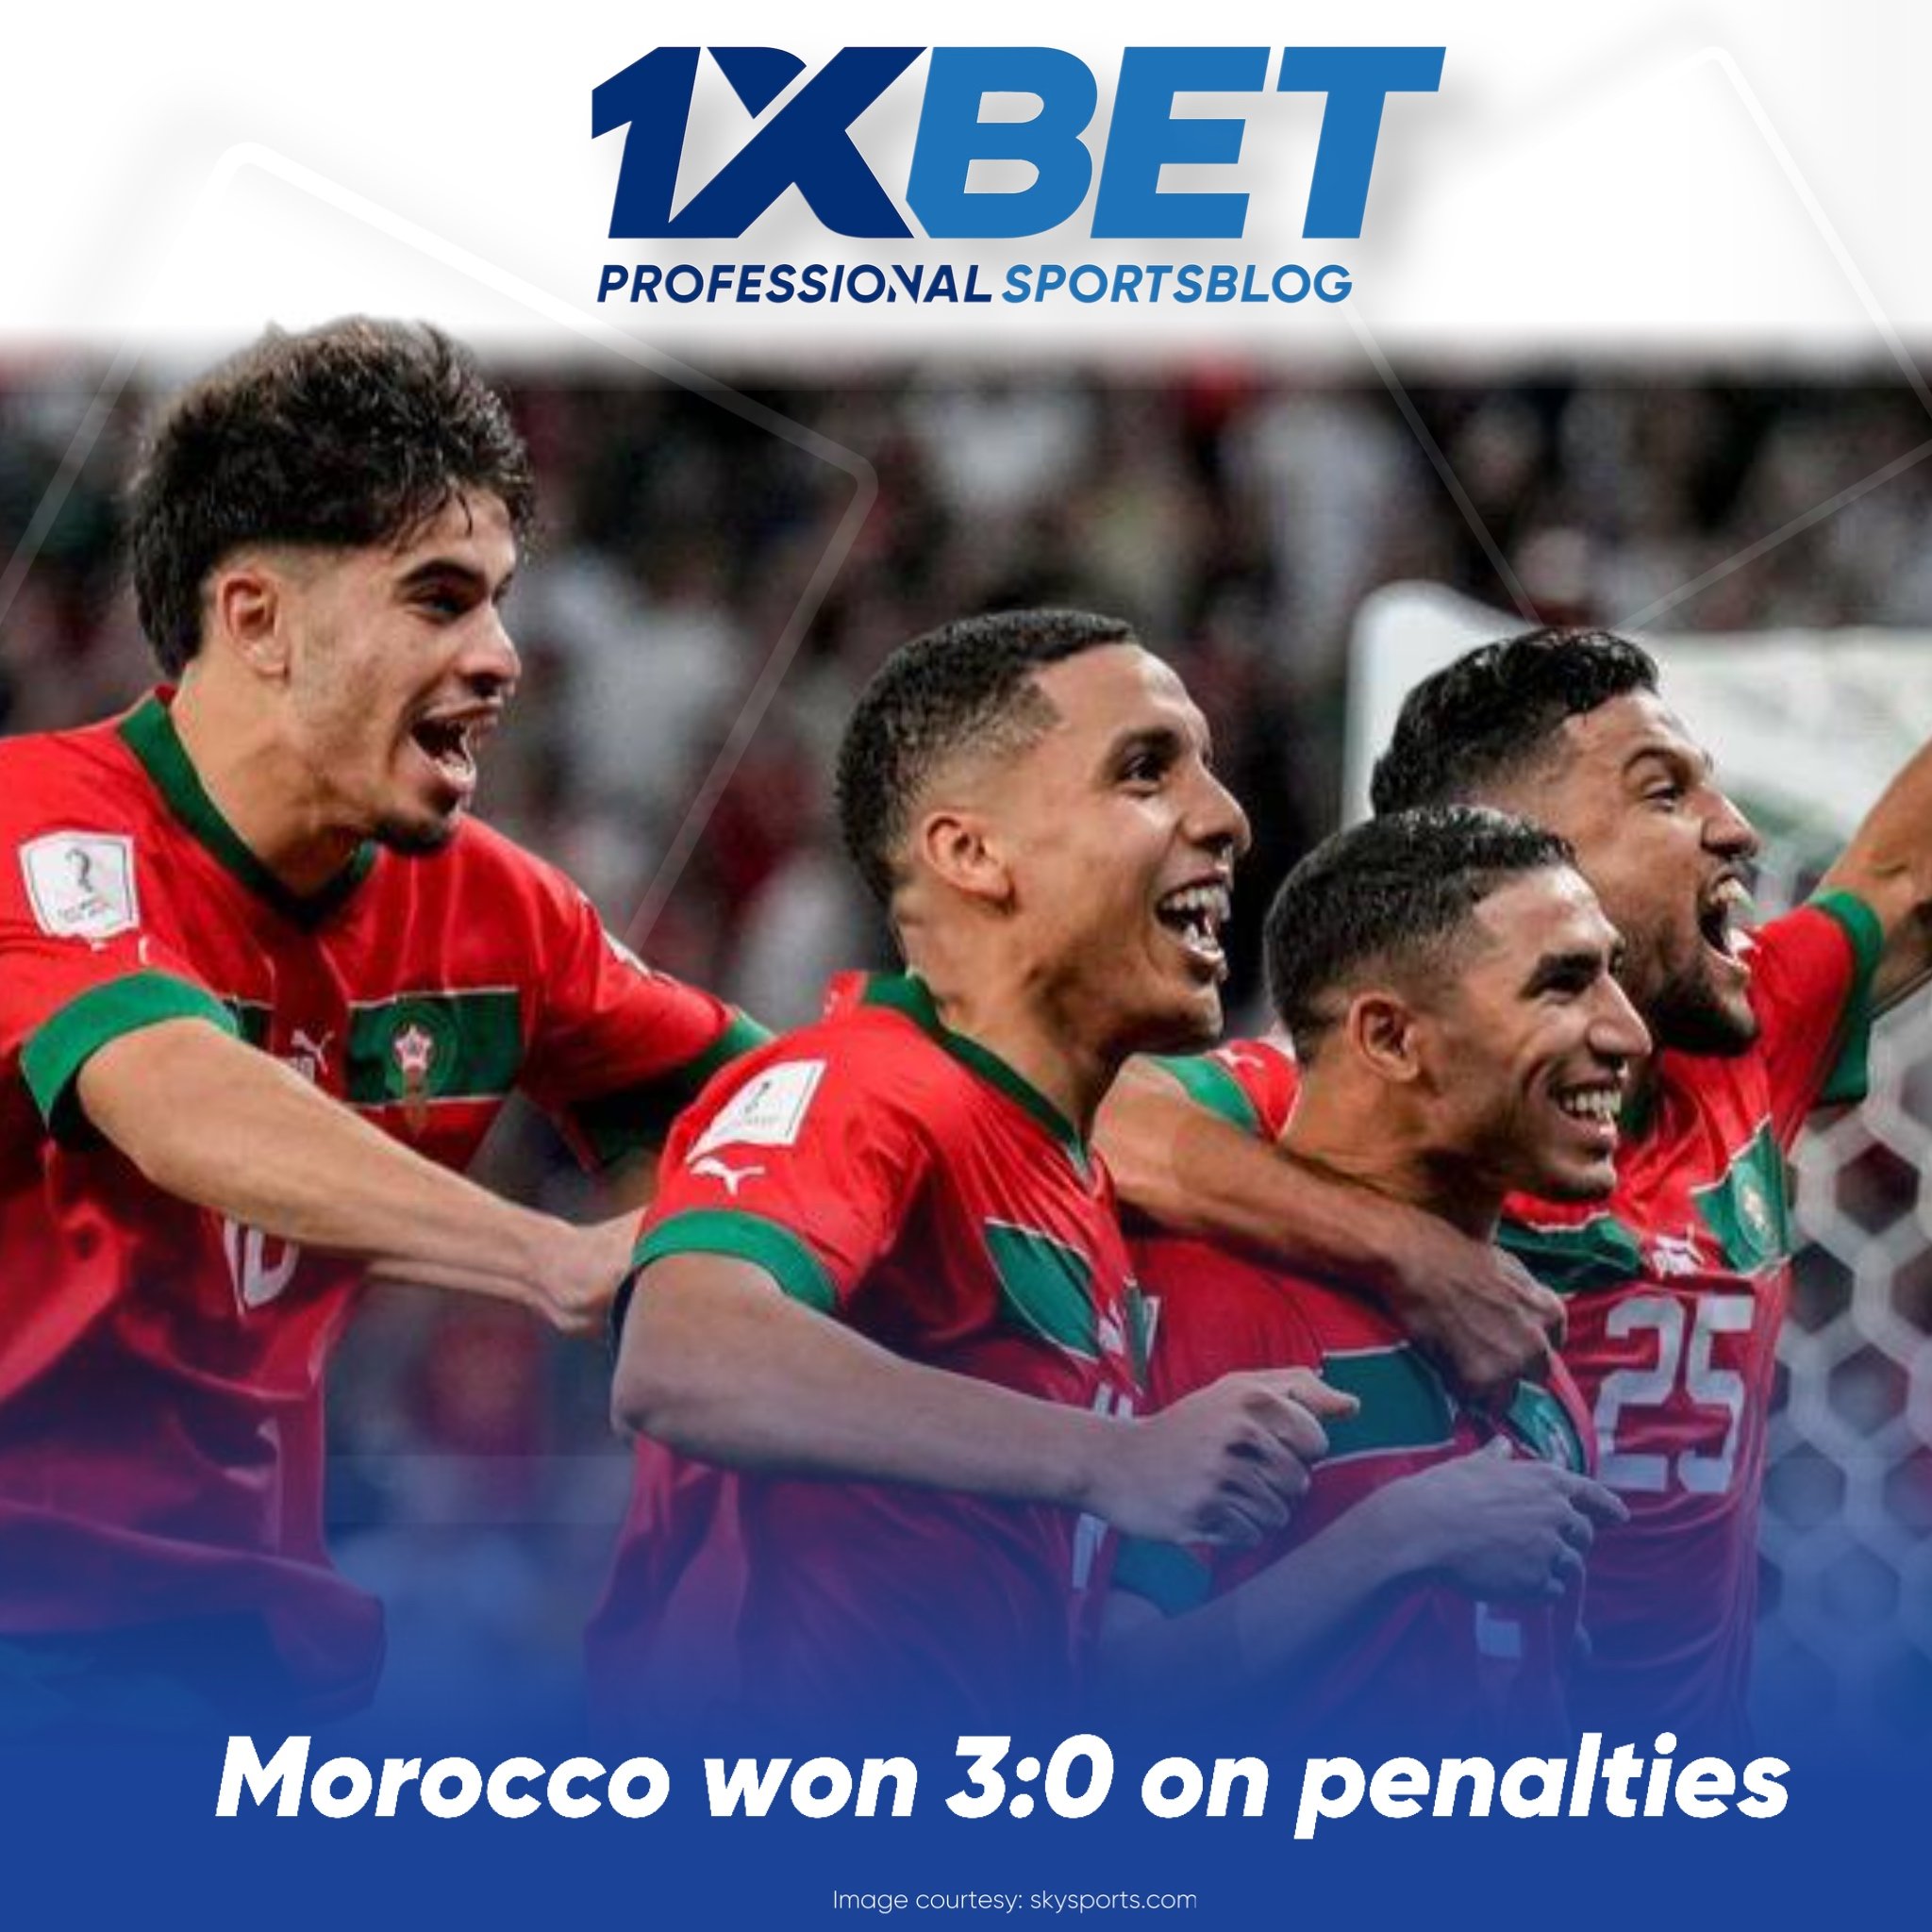 Morocco won 3:0 on penalties